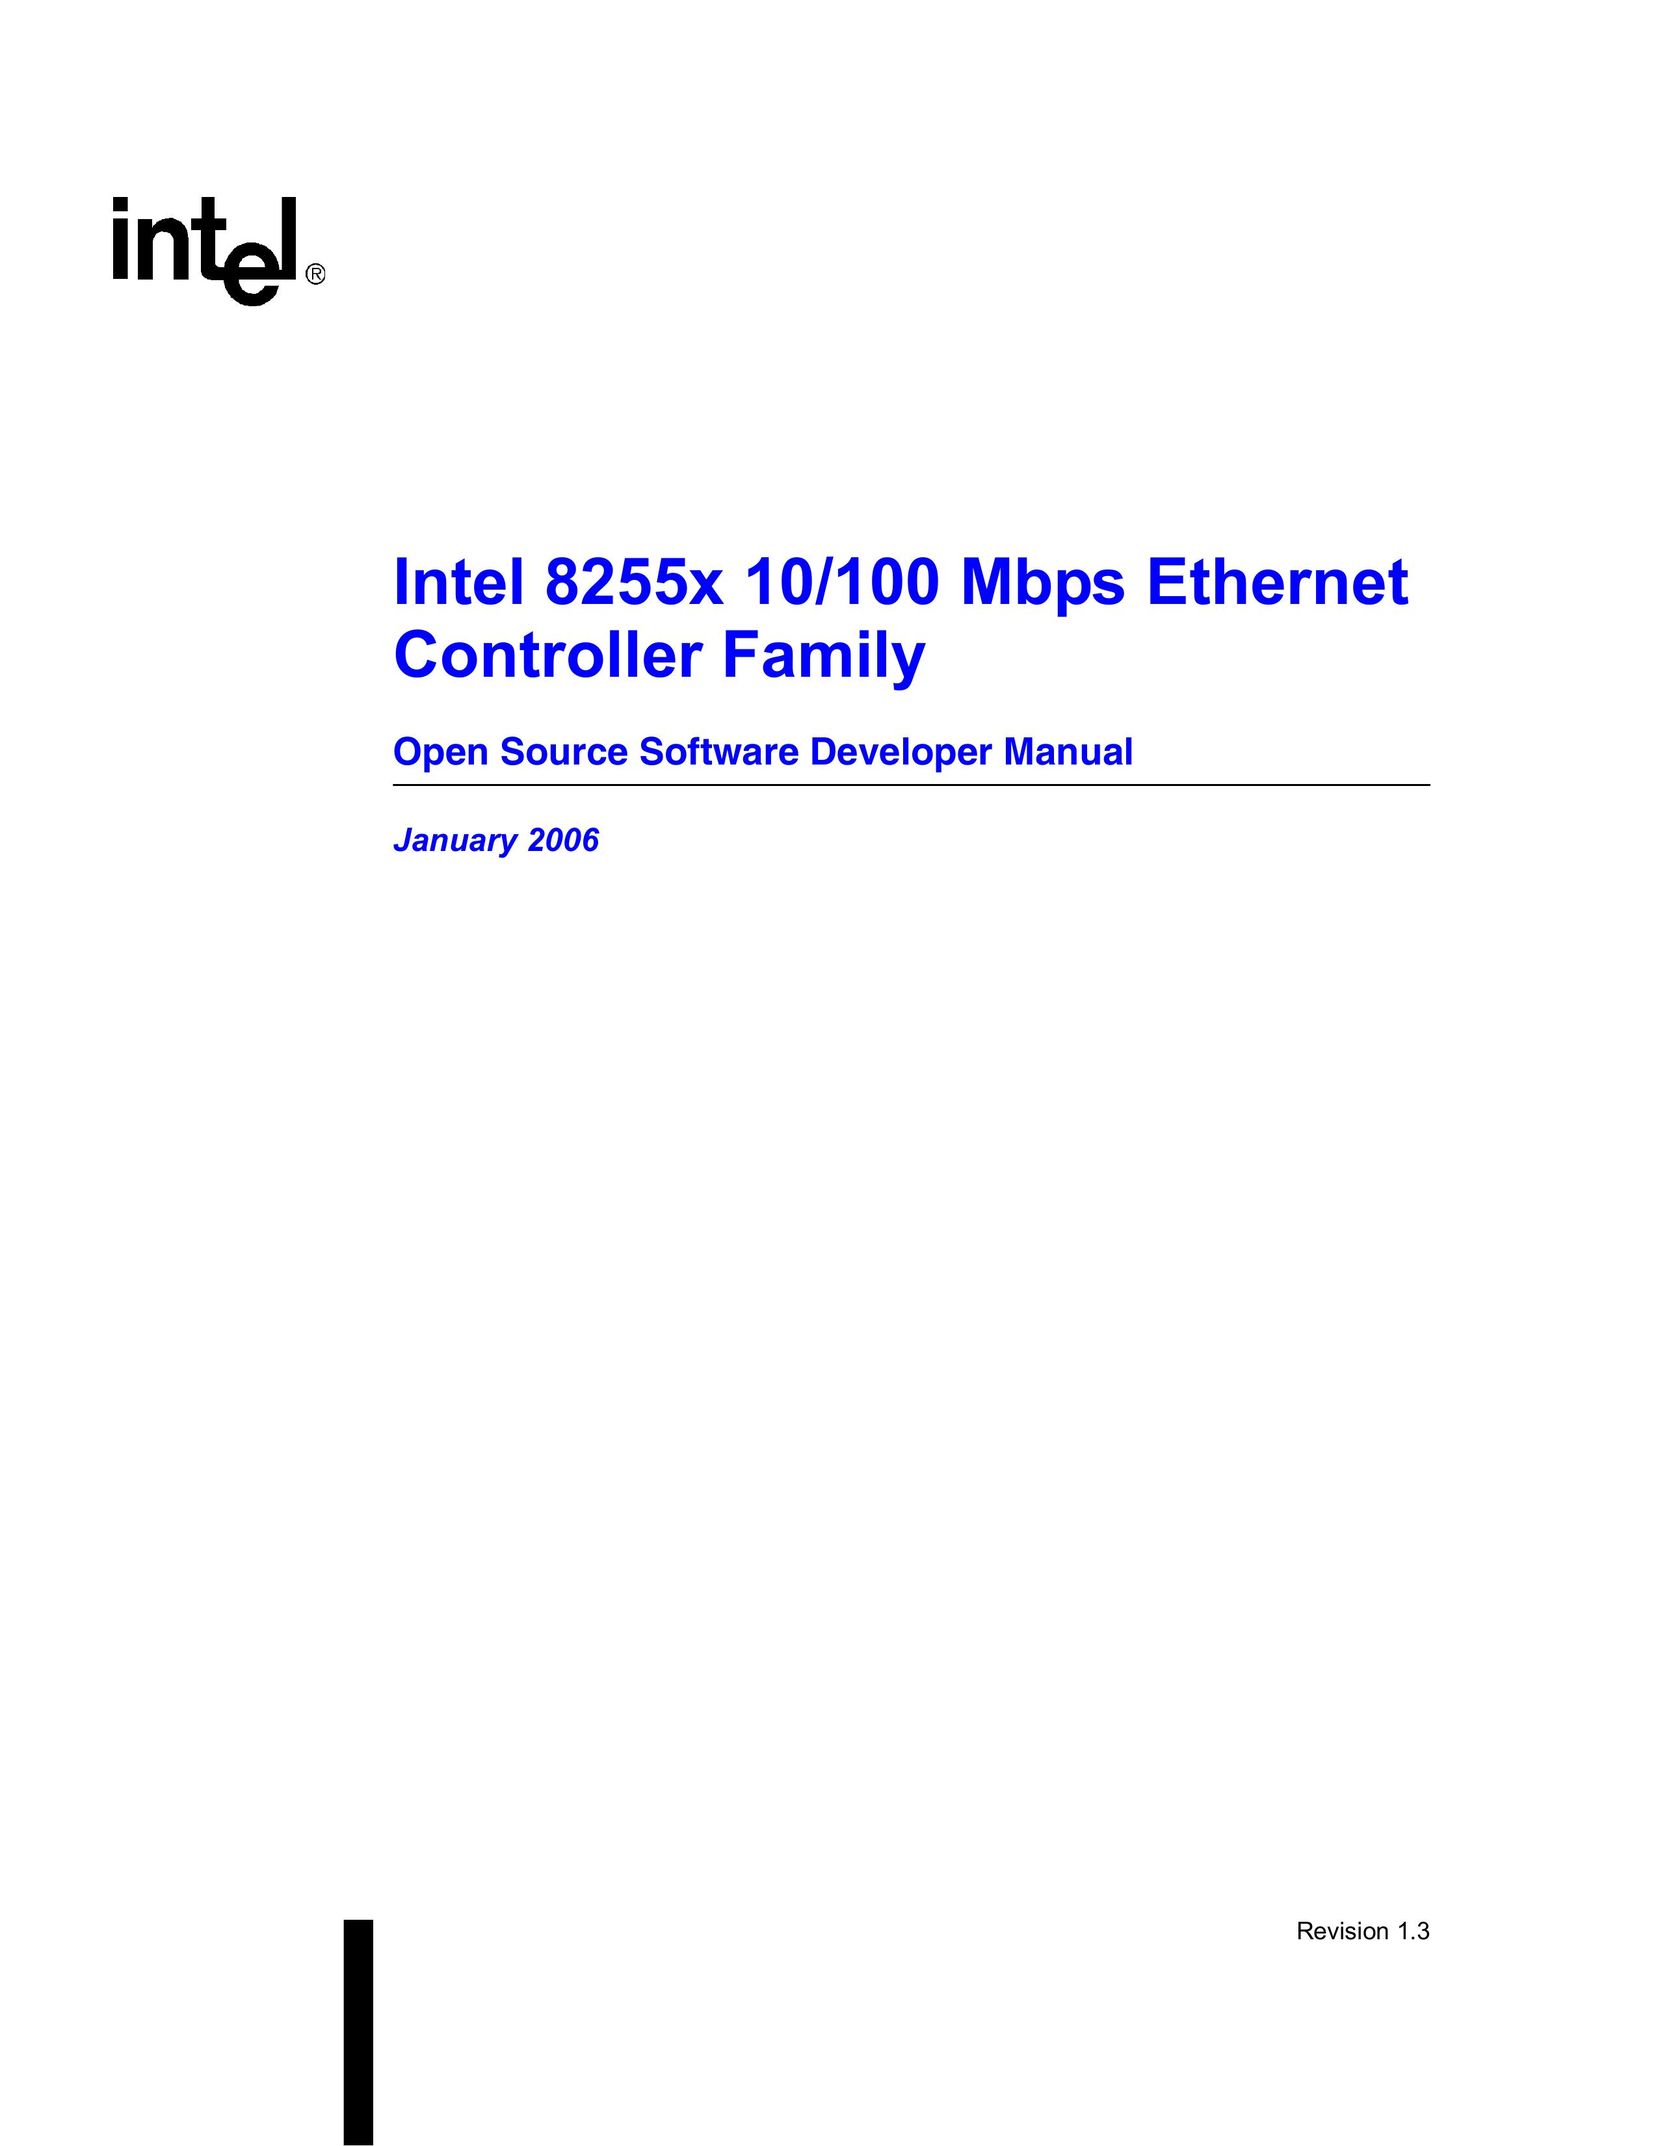 Intel 82559 Switch User Manual